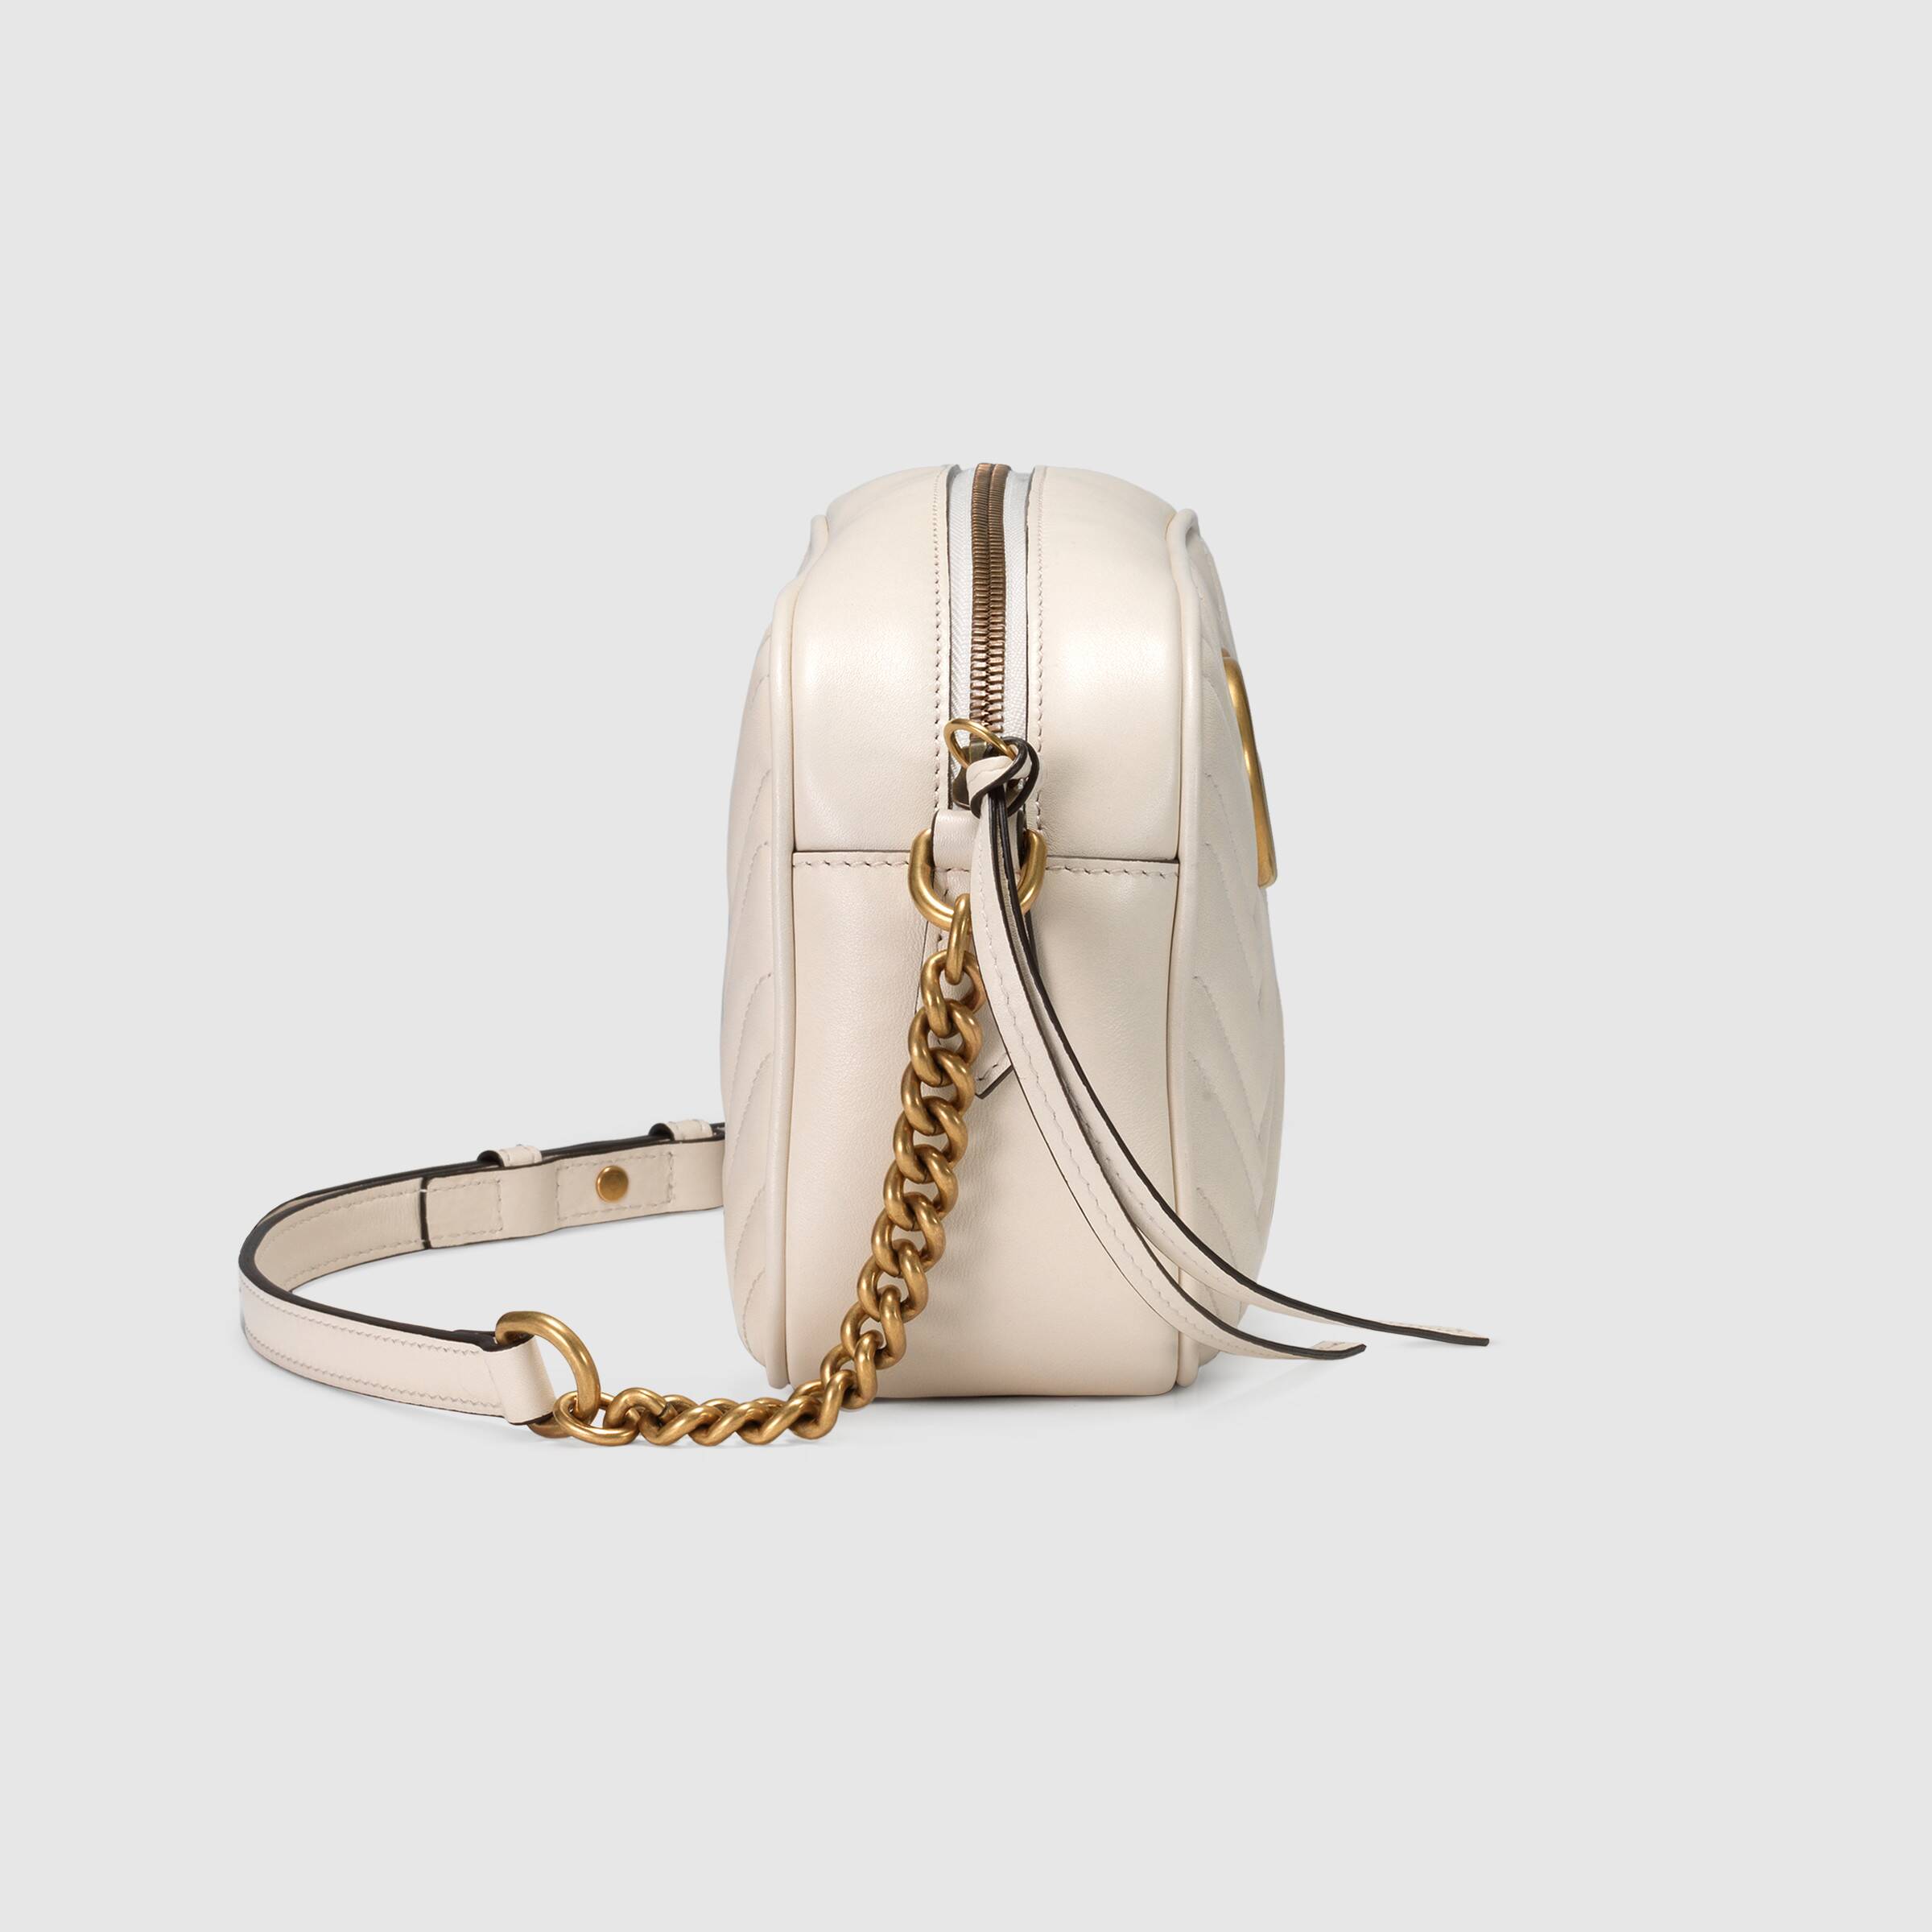 Gucci GG Marmont Small Matelassé Shoulder Bag White